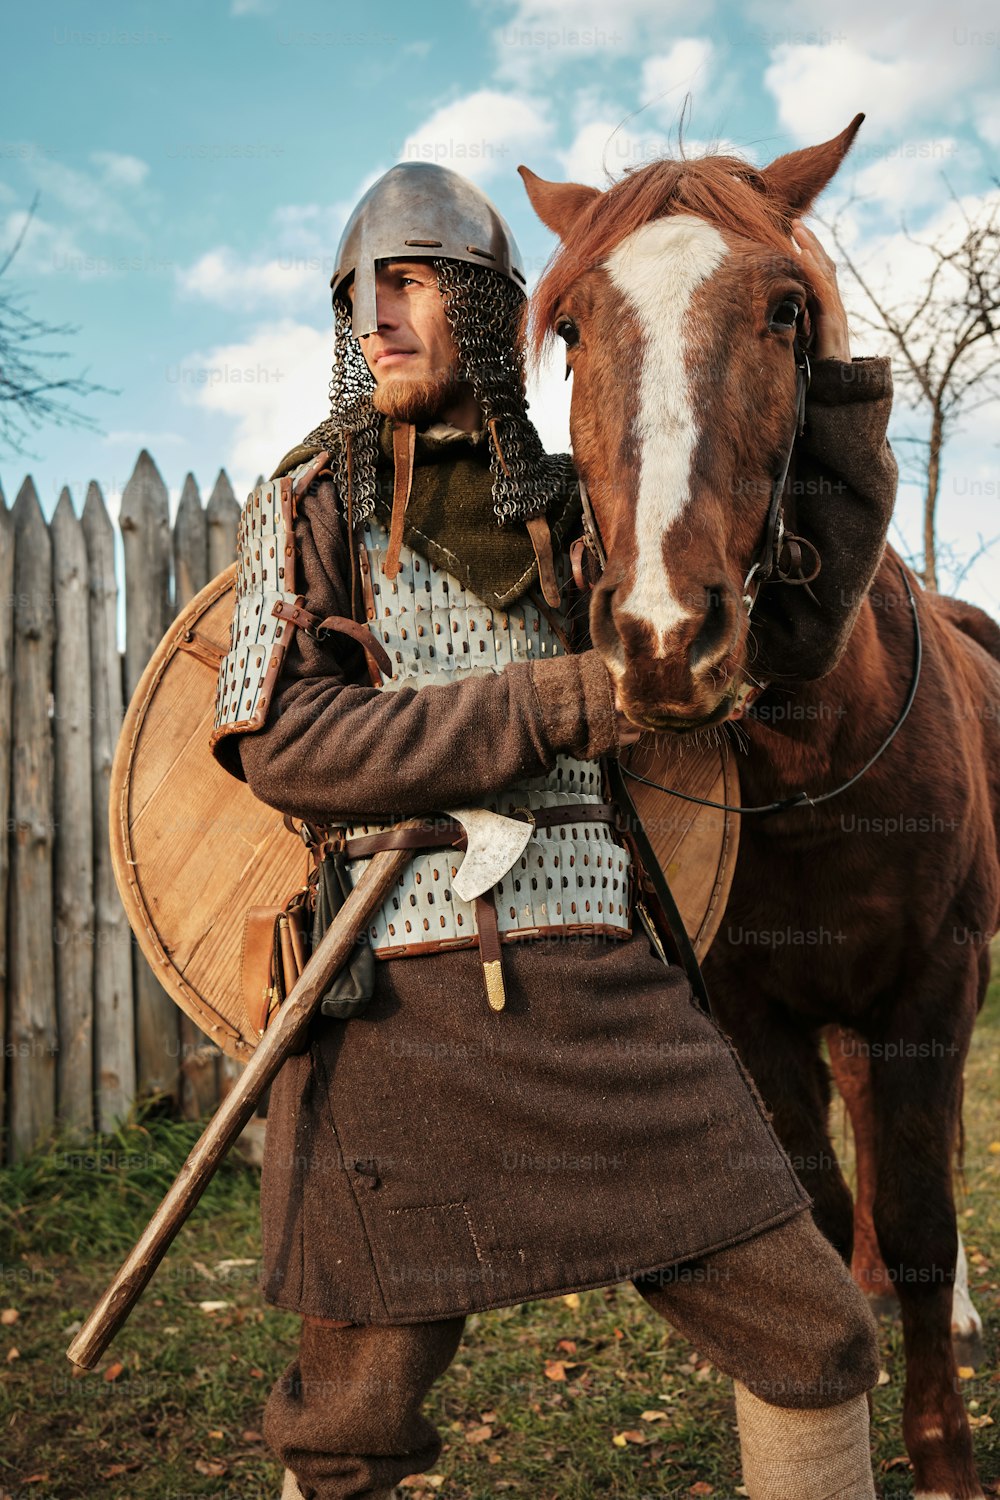 Un hombre con un traje medieval de pie junto a un caballo